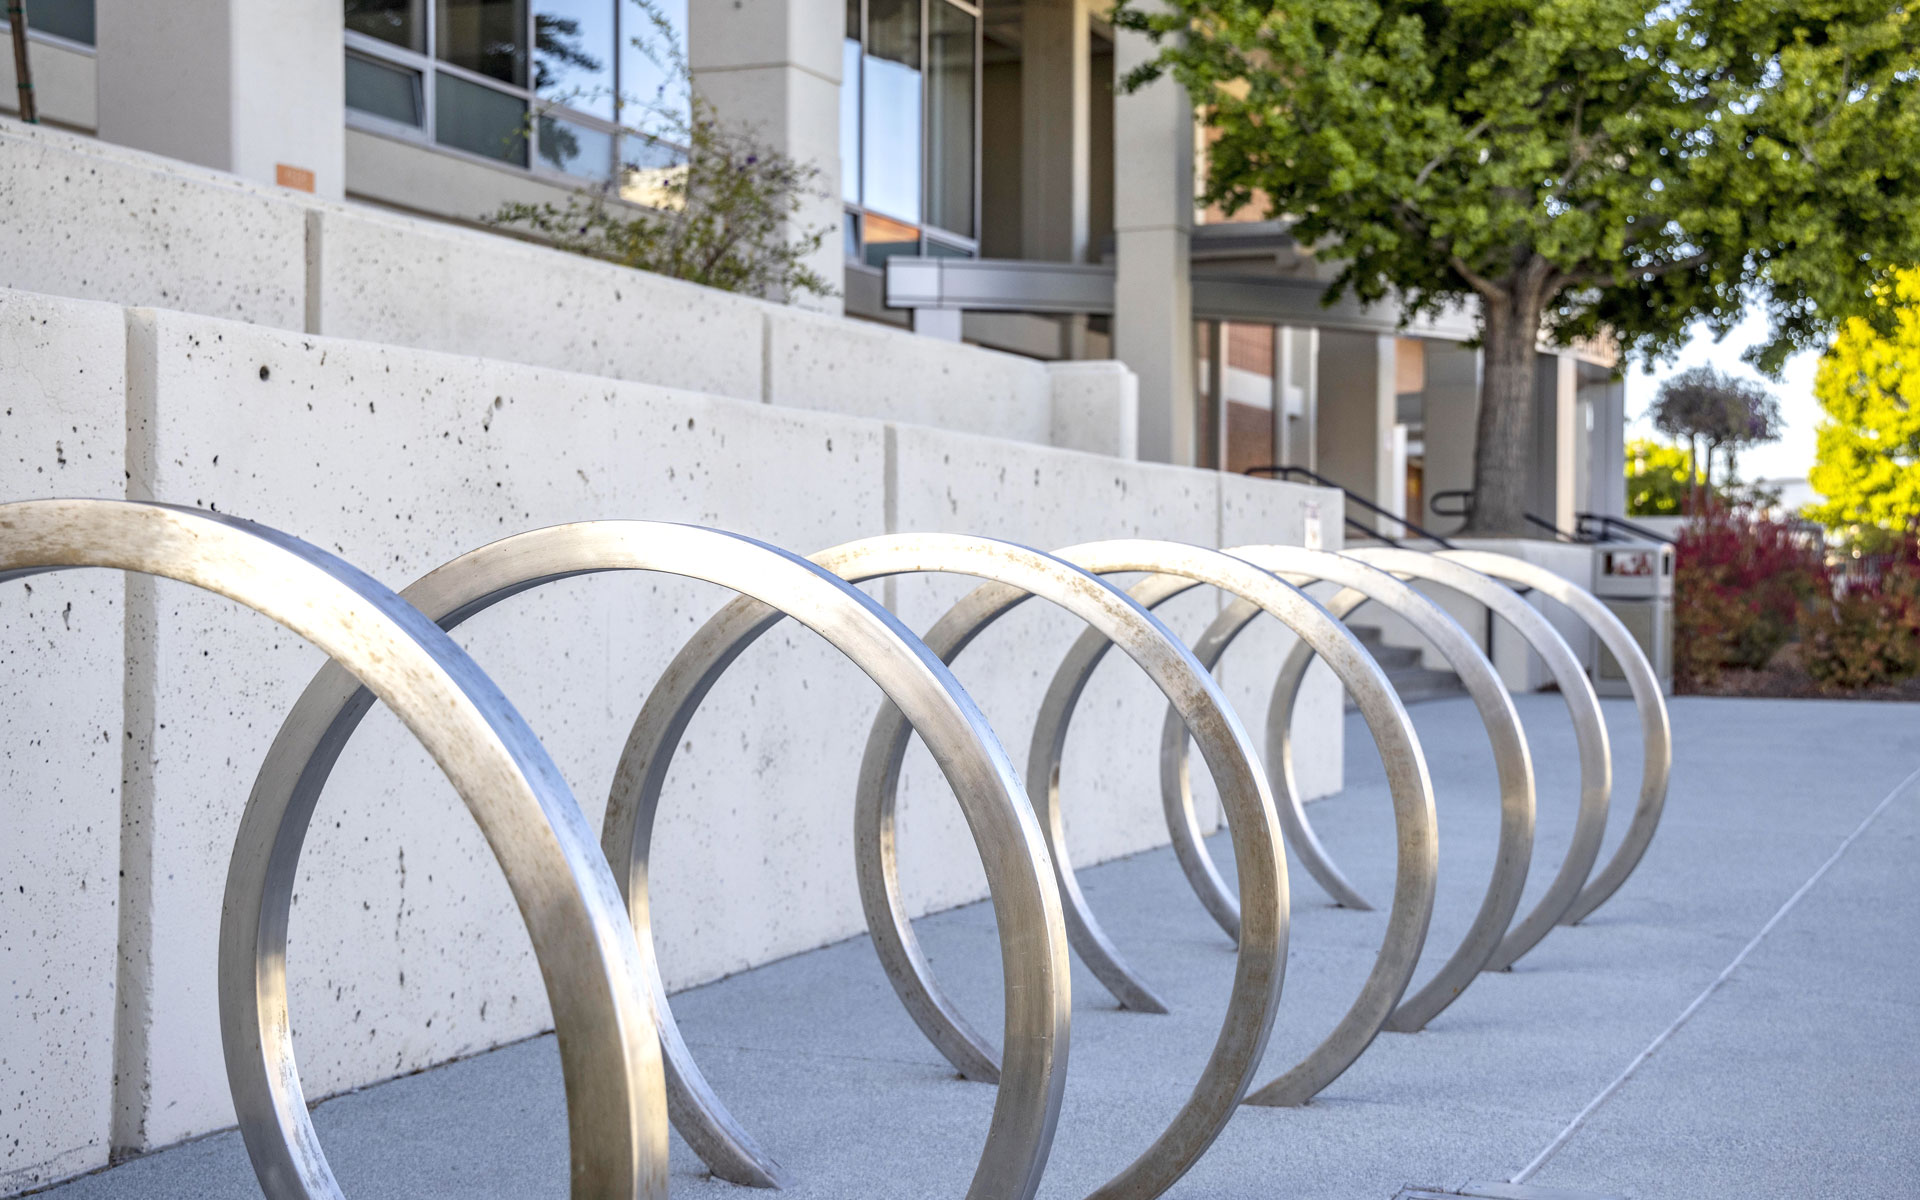 Round bicycle racks set in concrete